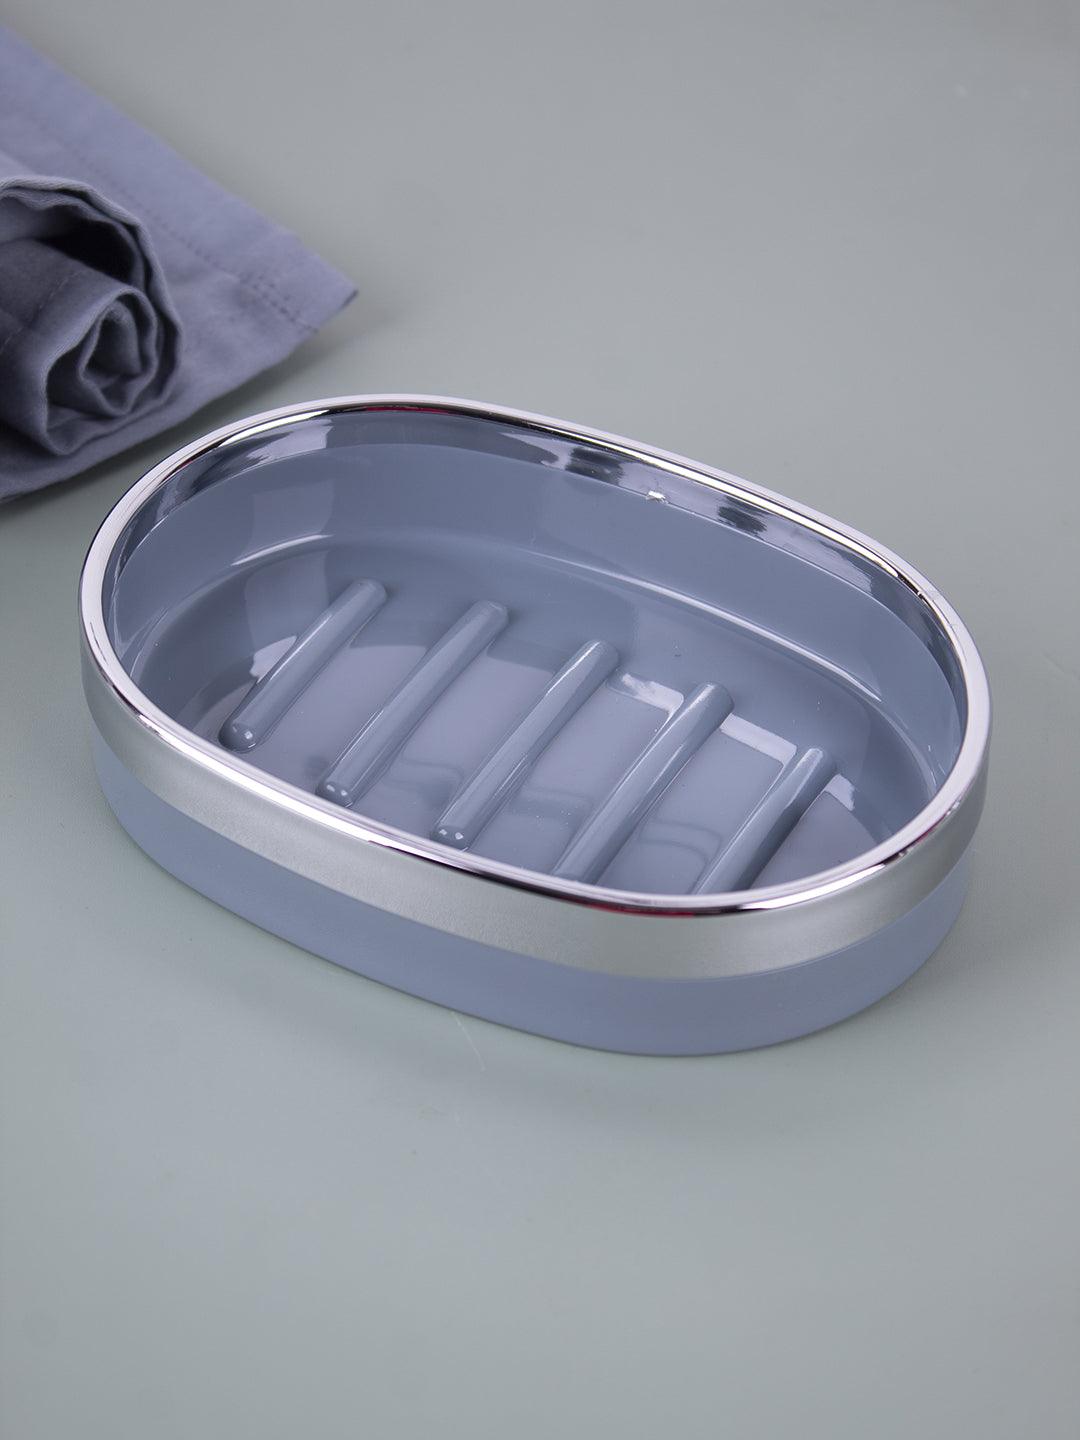 Market99 Oval Soap Dish Holder | Soap Dish | Soap Holder - MARKET 99